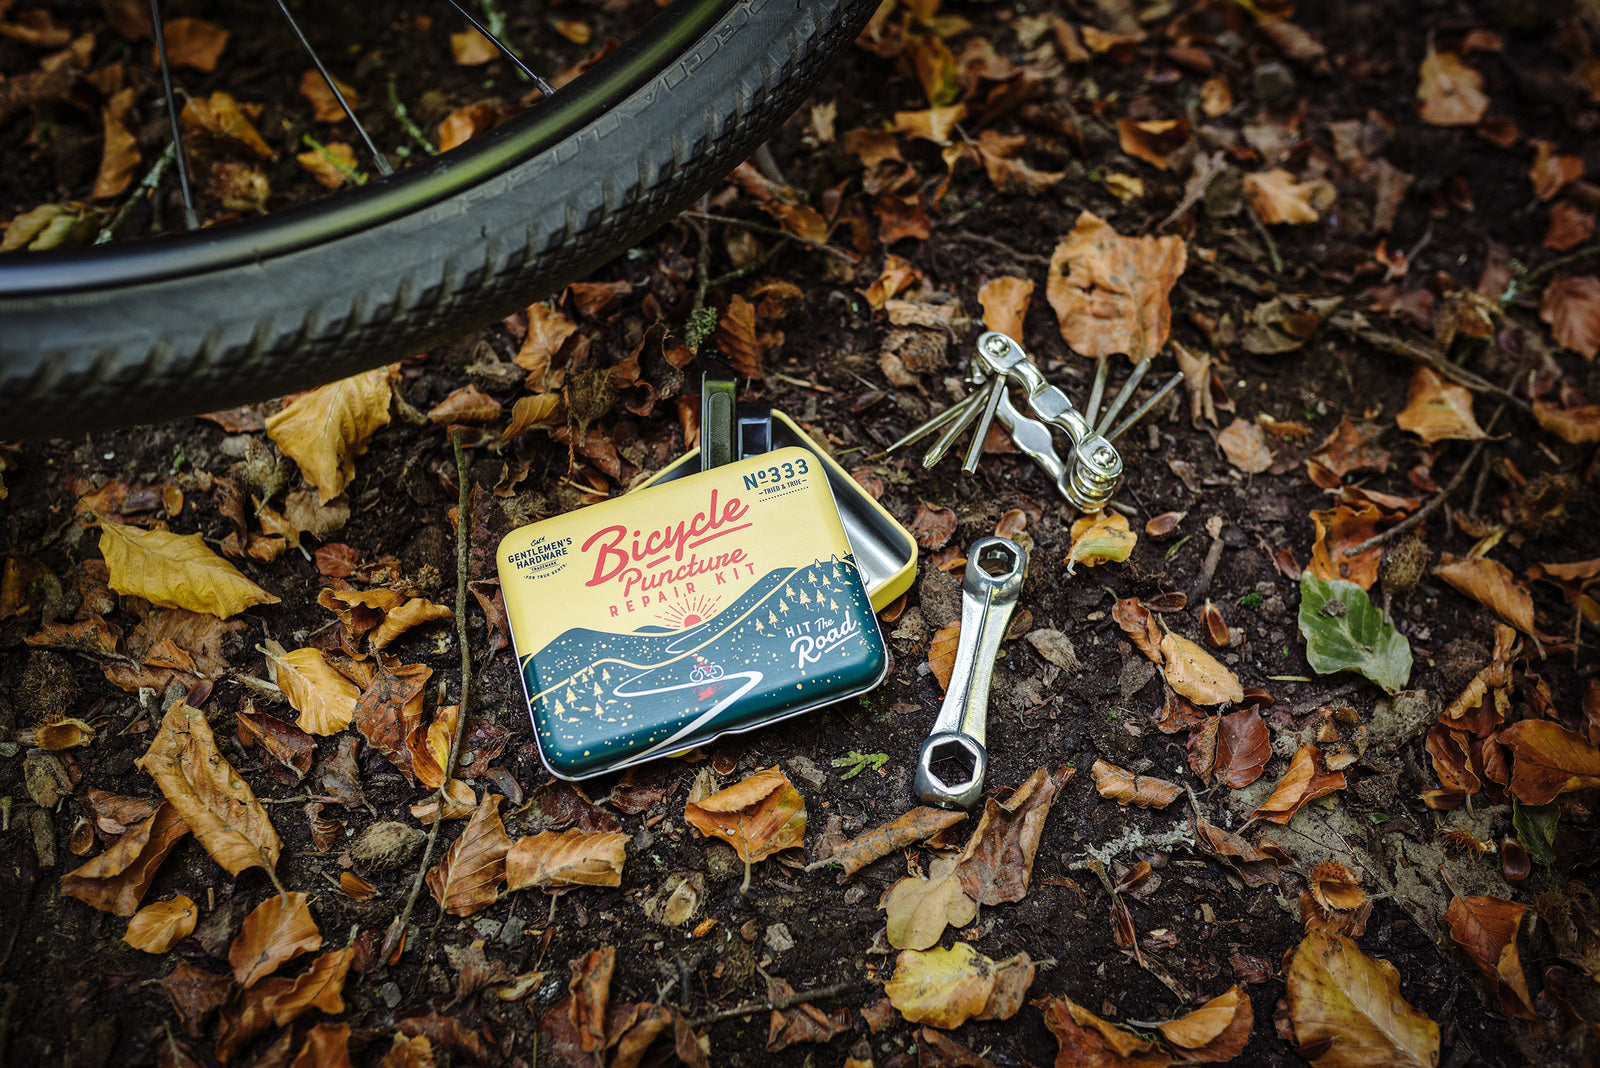 Gentlemen's Hardware: Bicycle Repair Kit